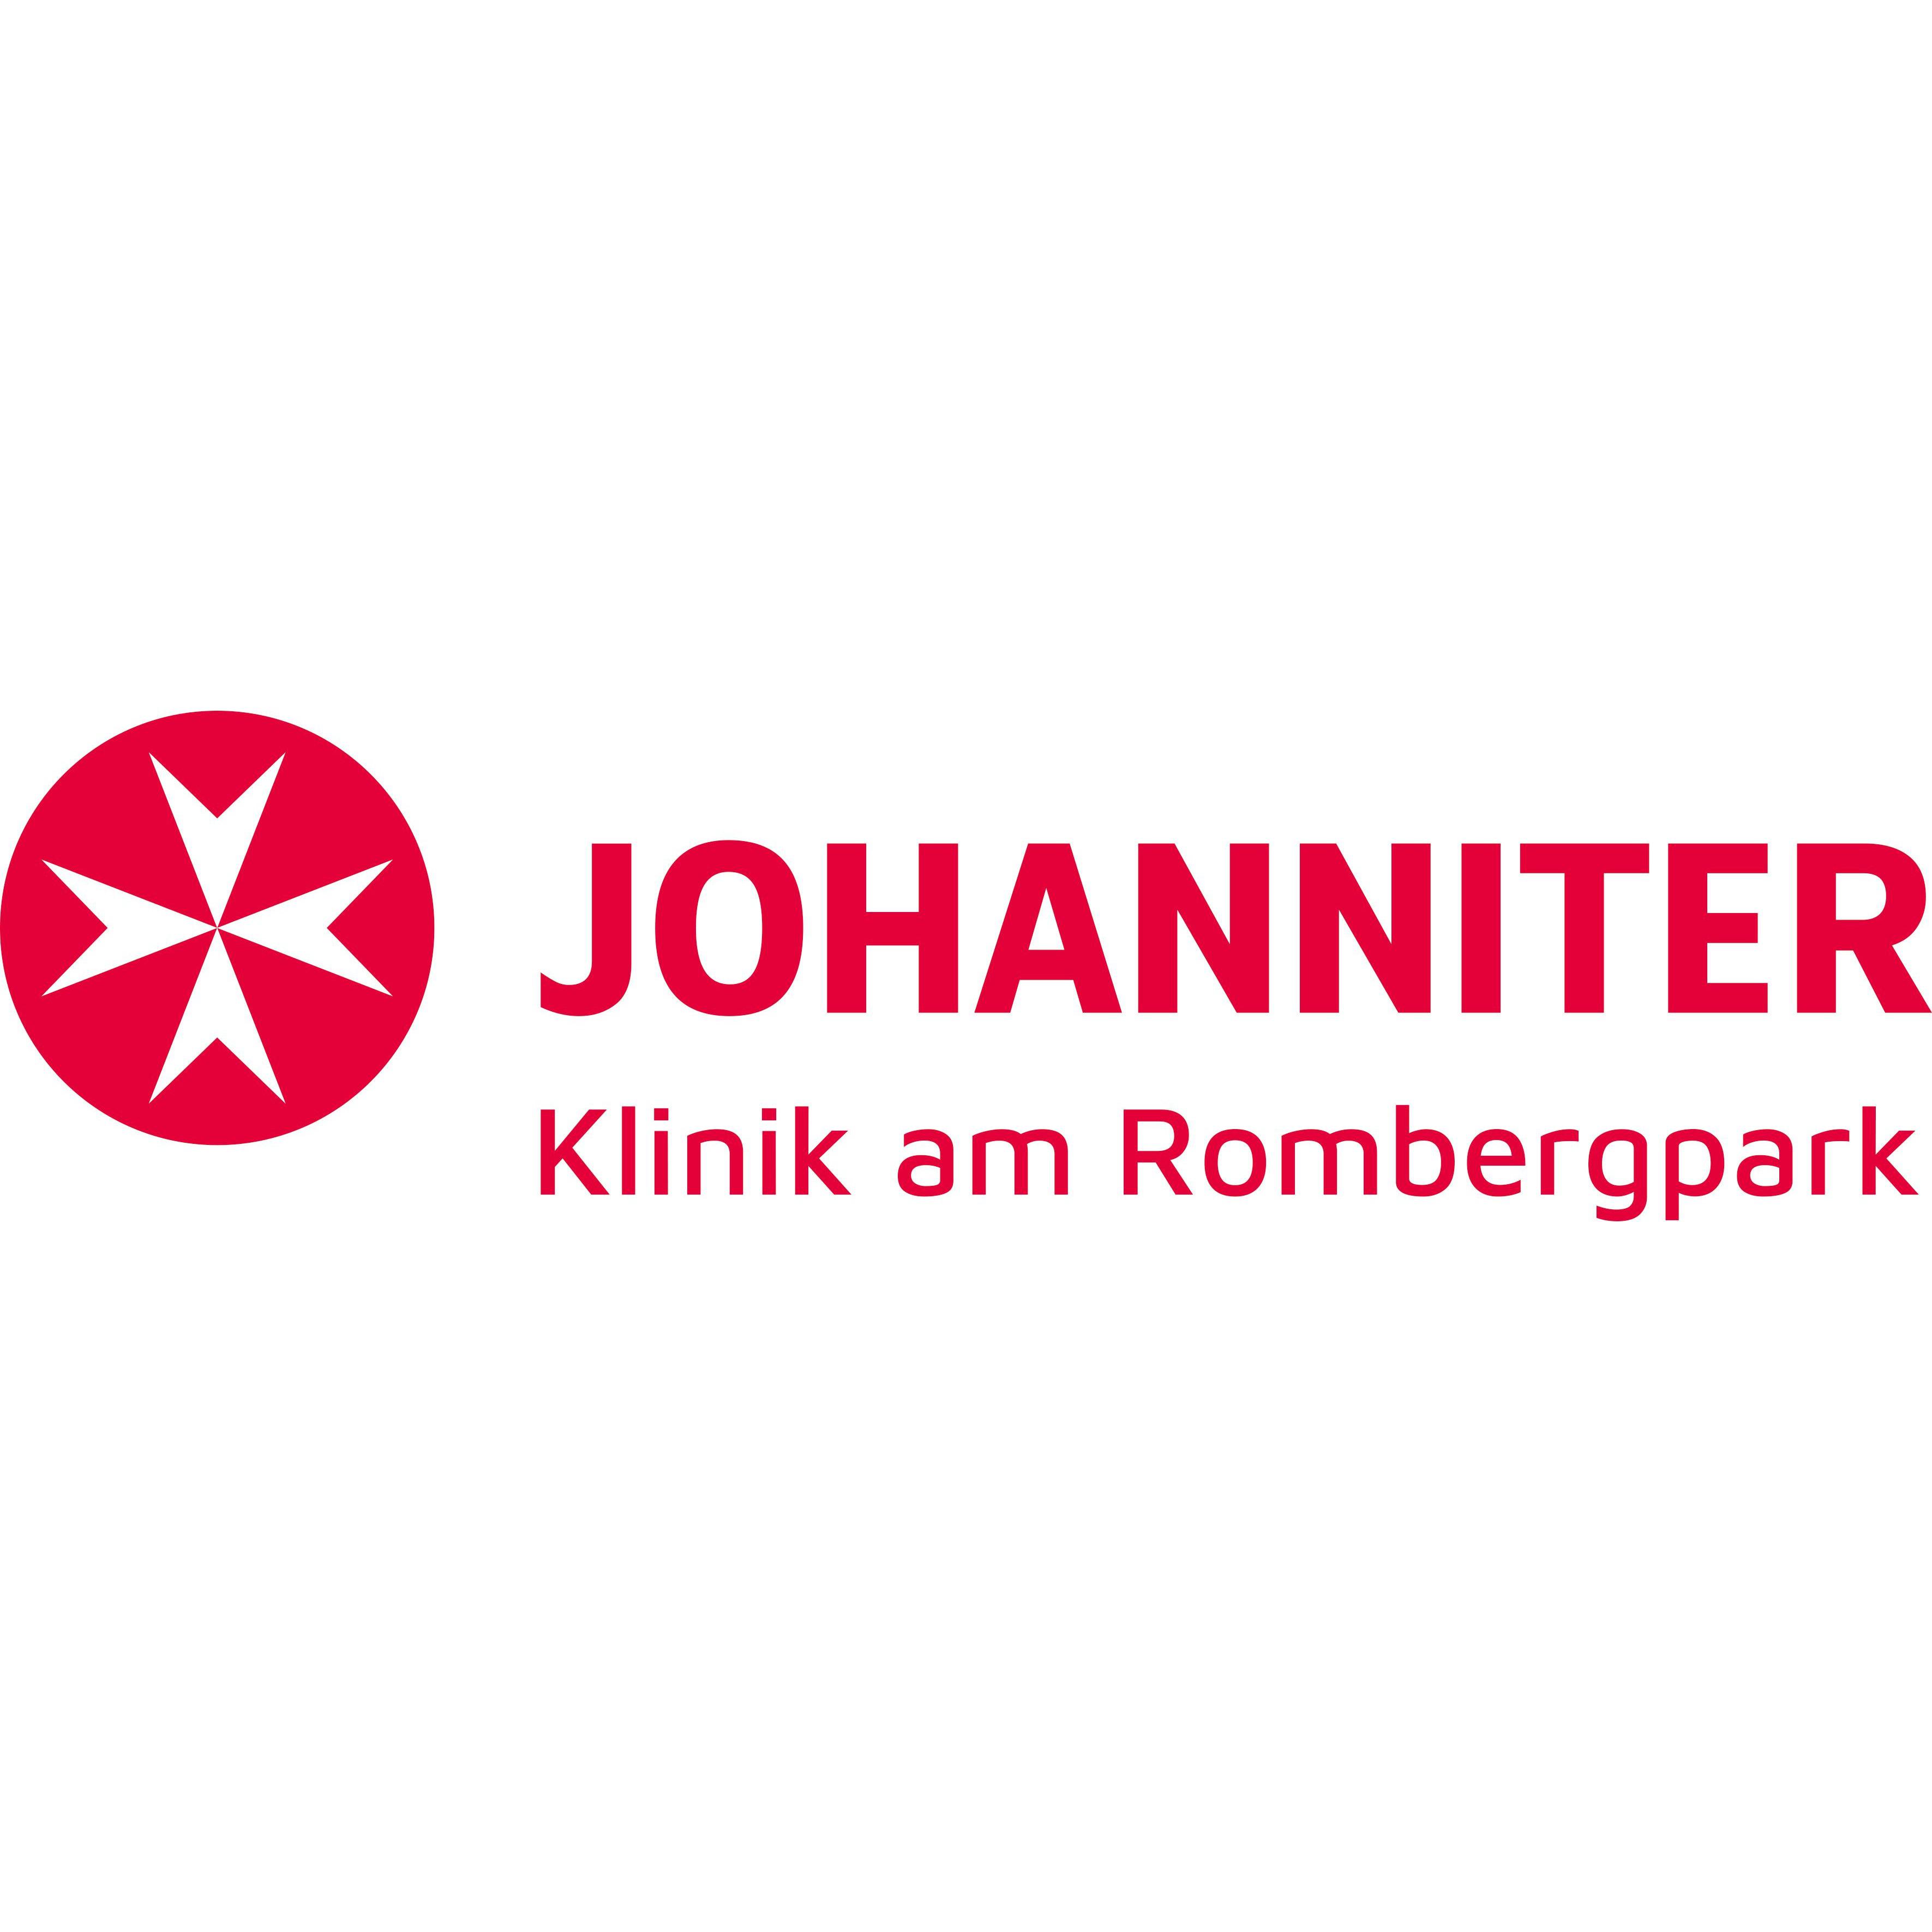 Johanniter-Klinik am Rombergpark Dortmund in Dortmund - Logo